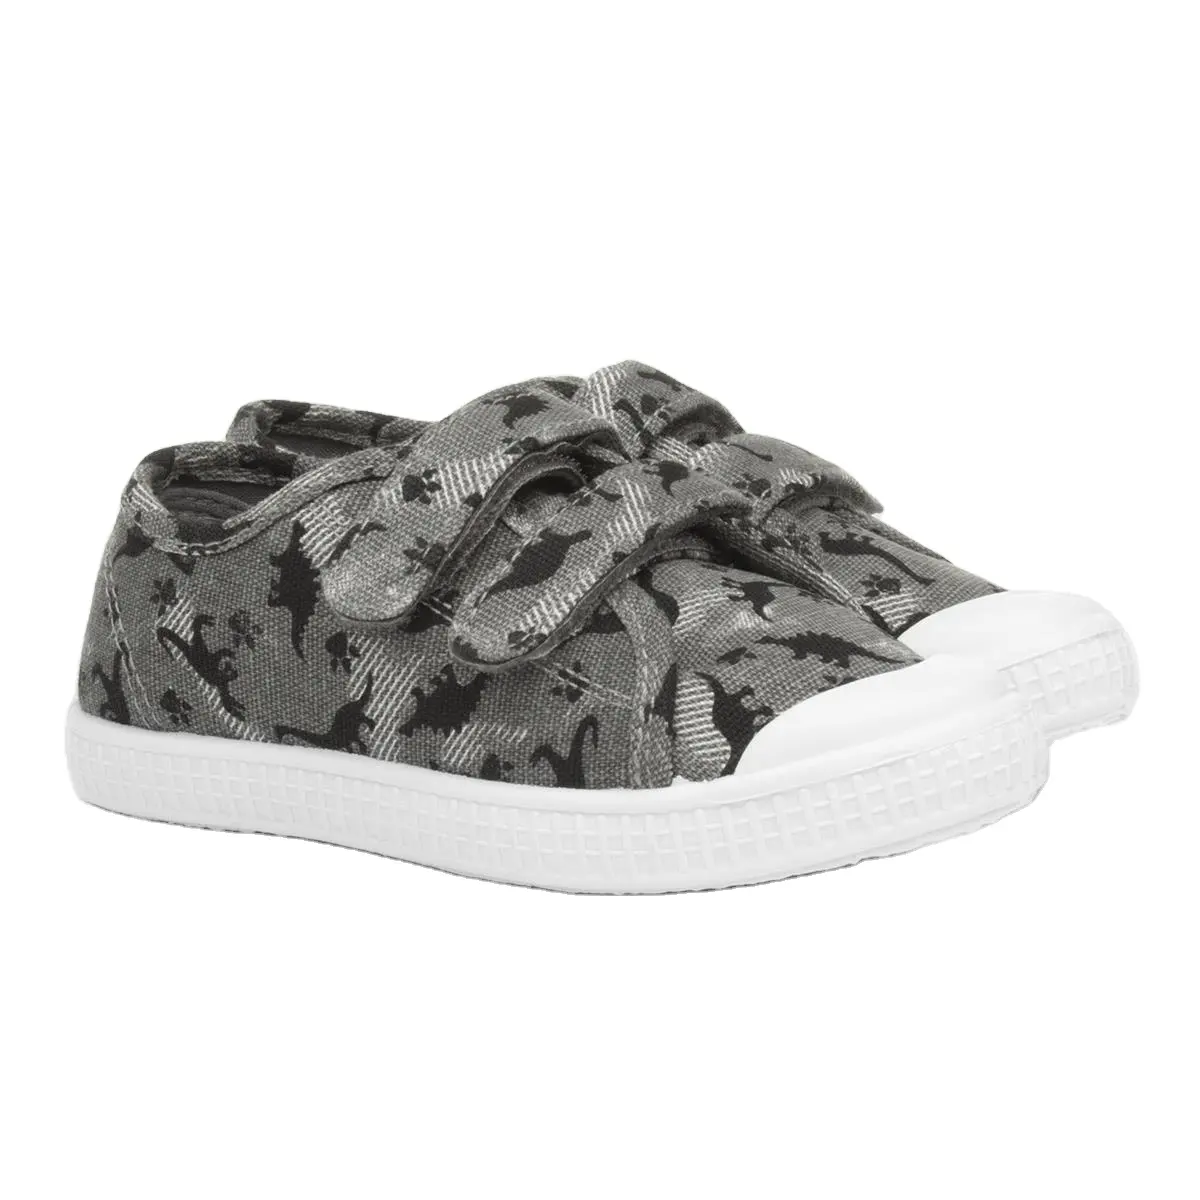 Dark Grey Fashion Dino printing Canvas Shoes For boys Casual walking Shoes canvas shoes for kids